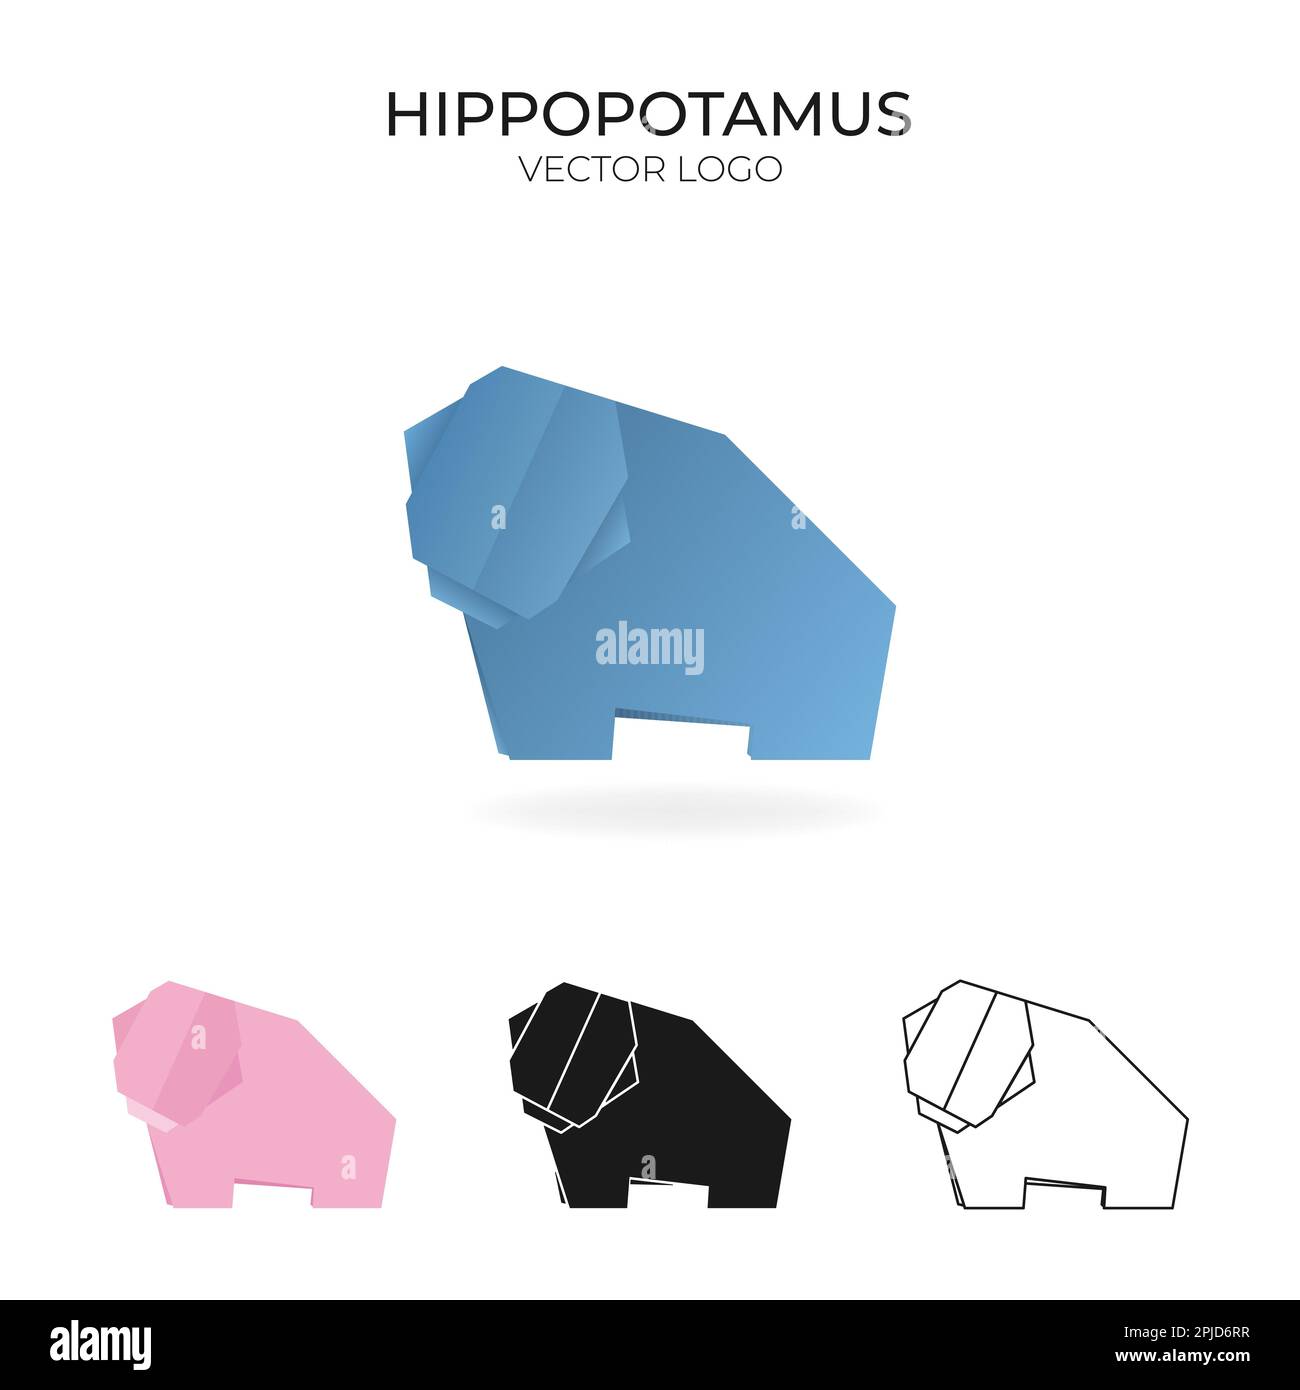 Origami vector logo and icon with hippopotamus.  Stock Vector